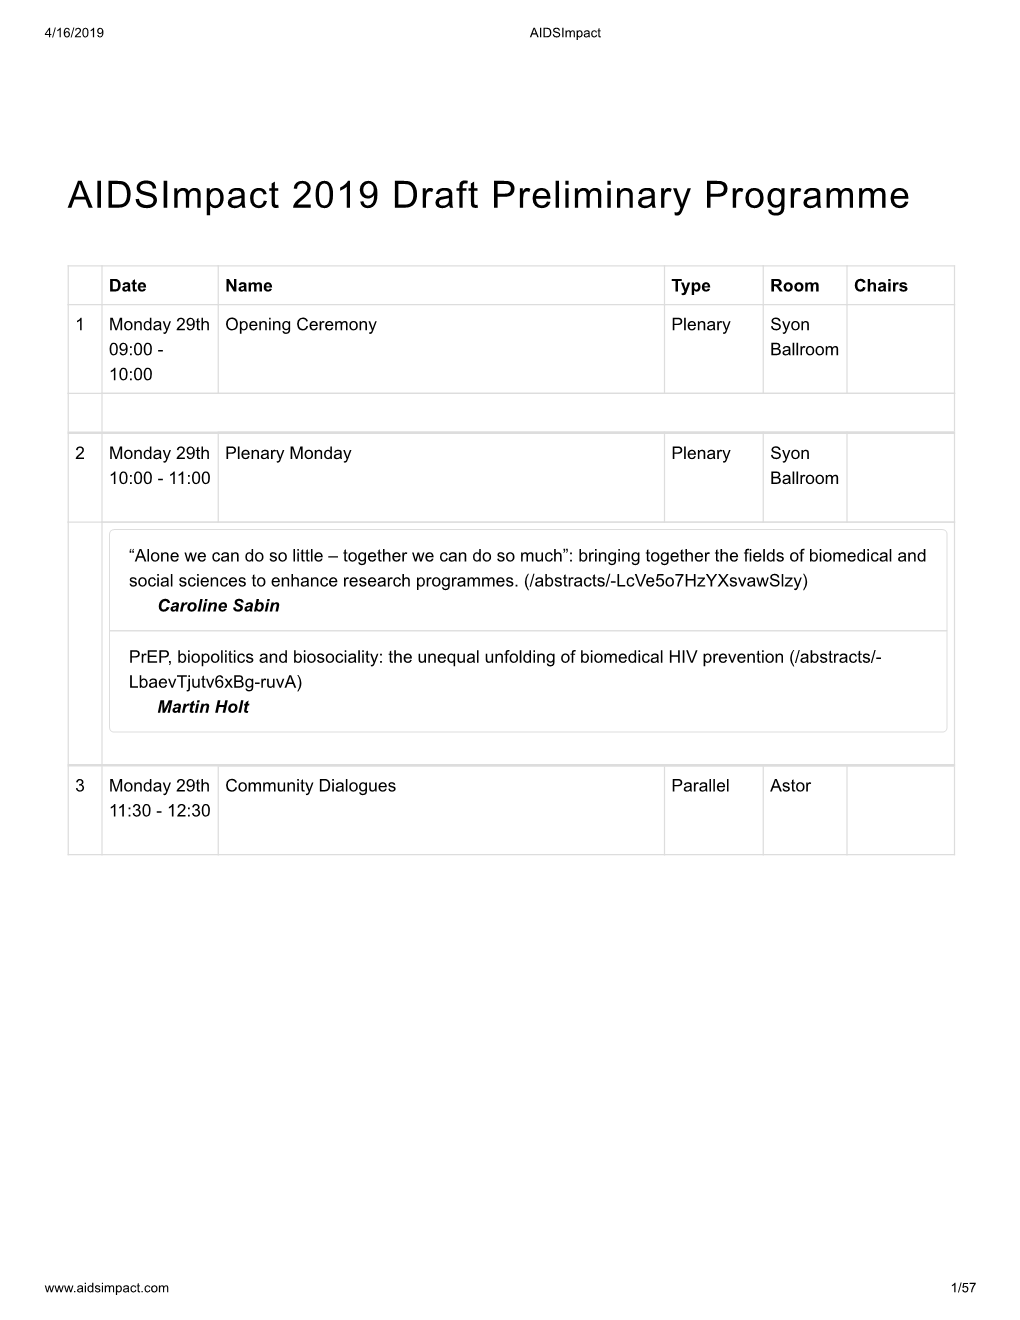 Aidsimpact 2019 Draft Preliminary Programme